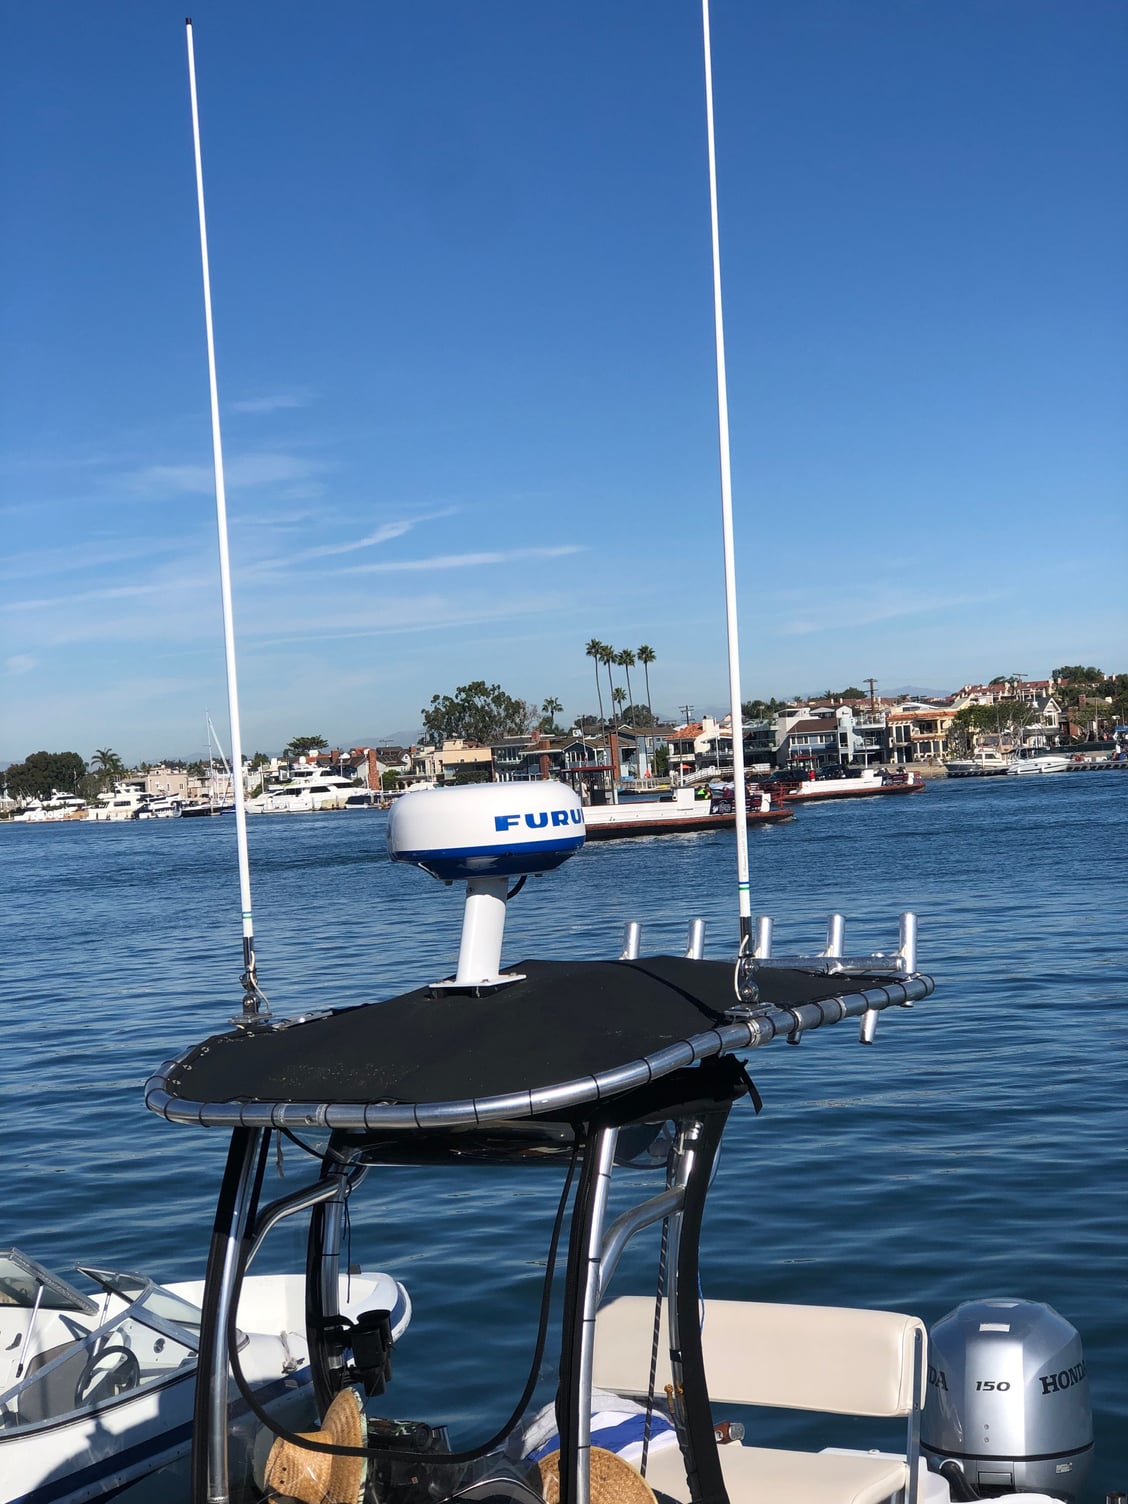 Garmin radar install do i need a wedge - The Hull Truth - Boating and Fishing  Forum